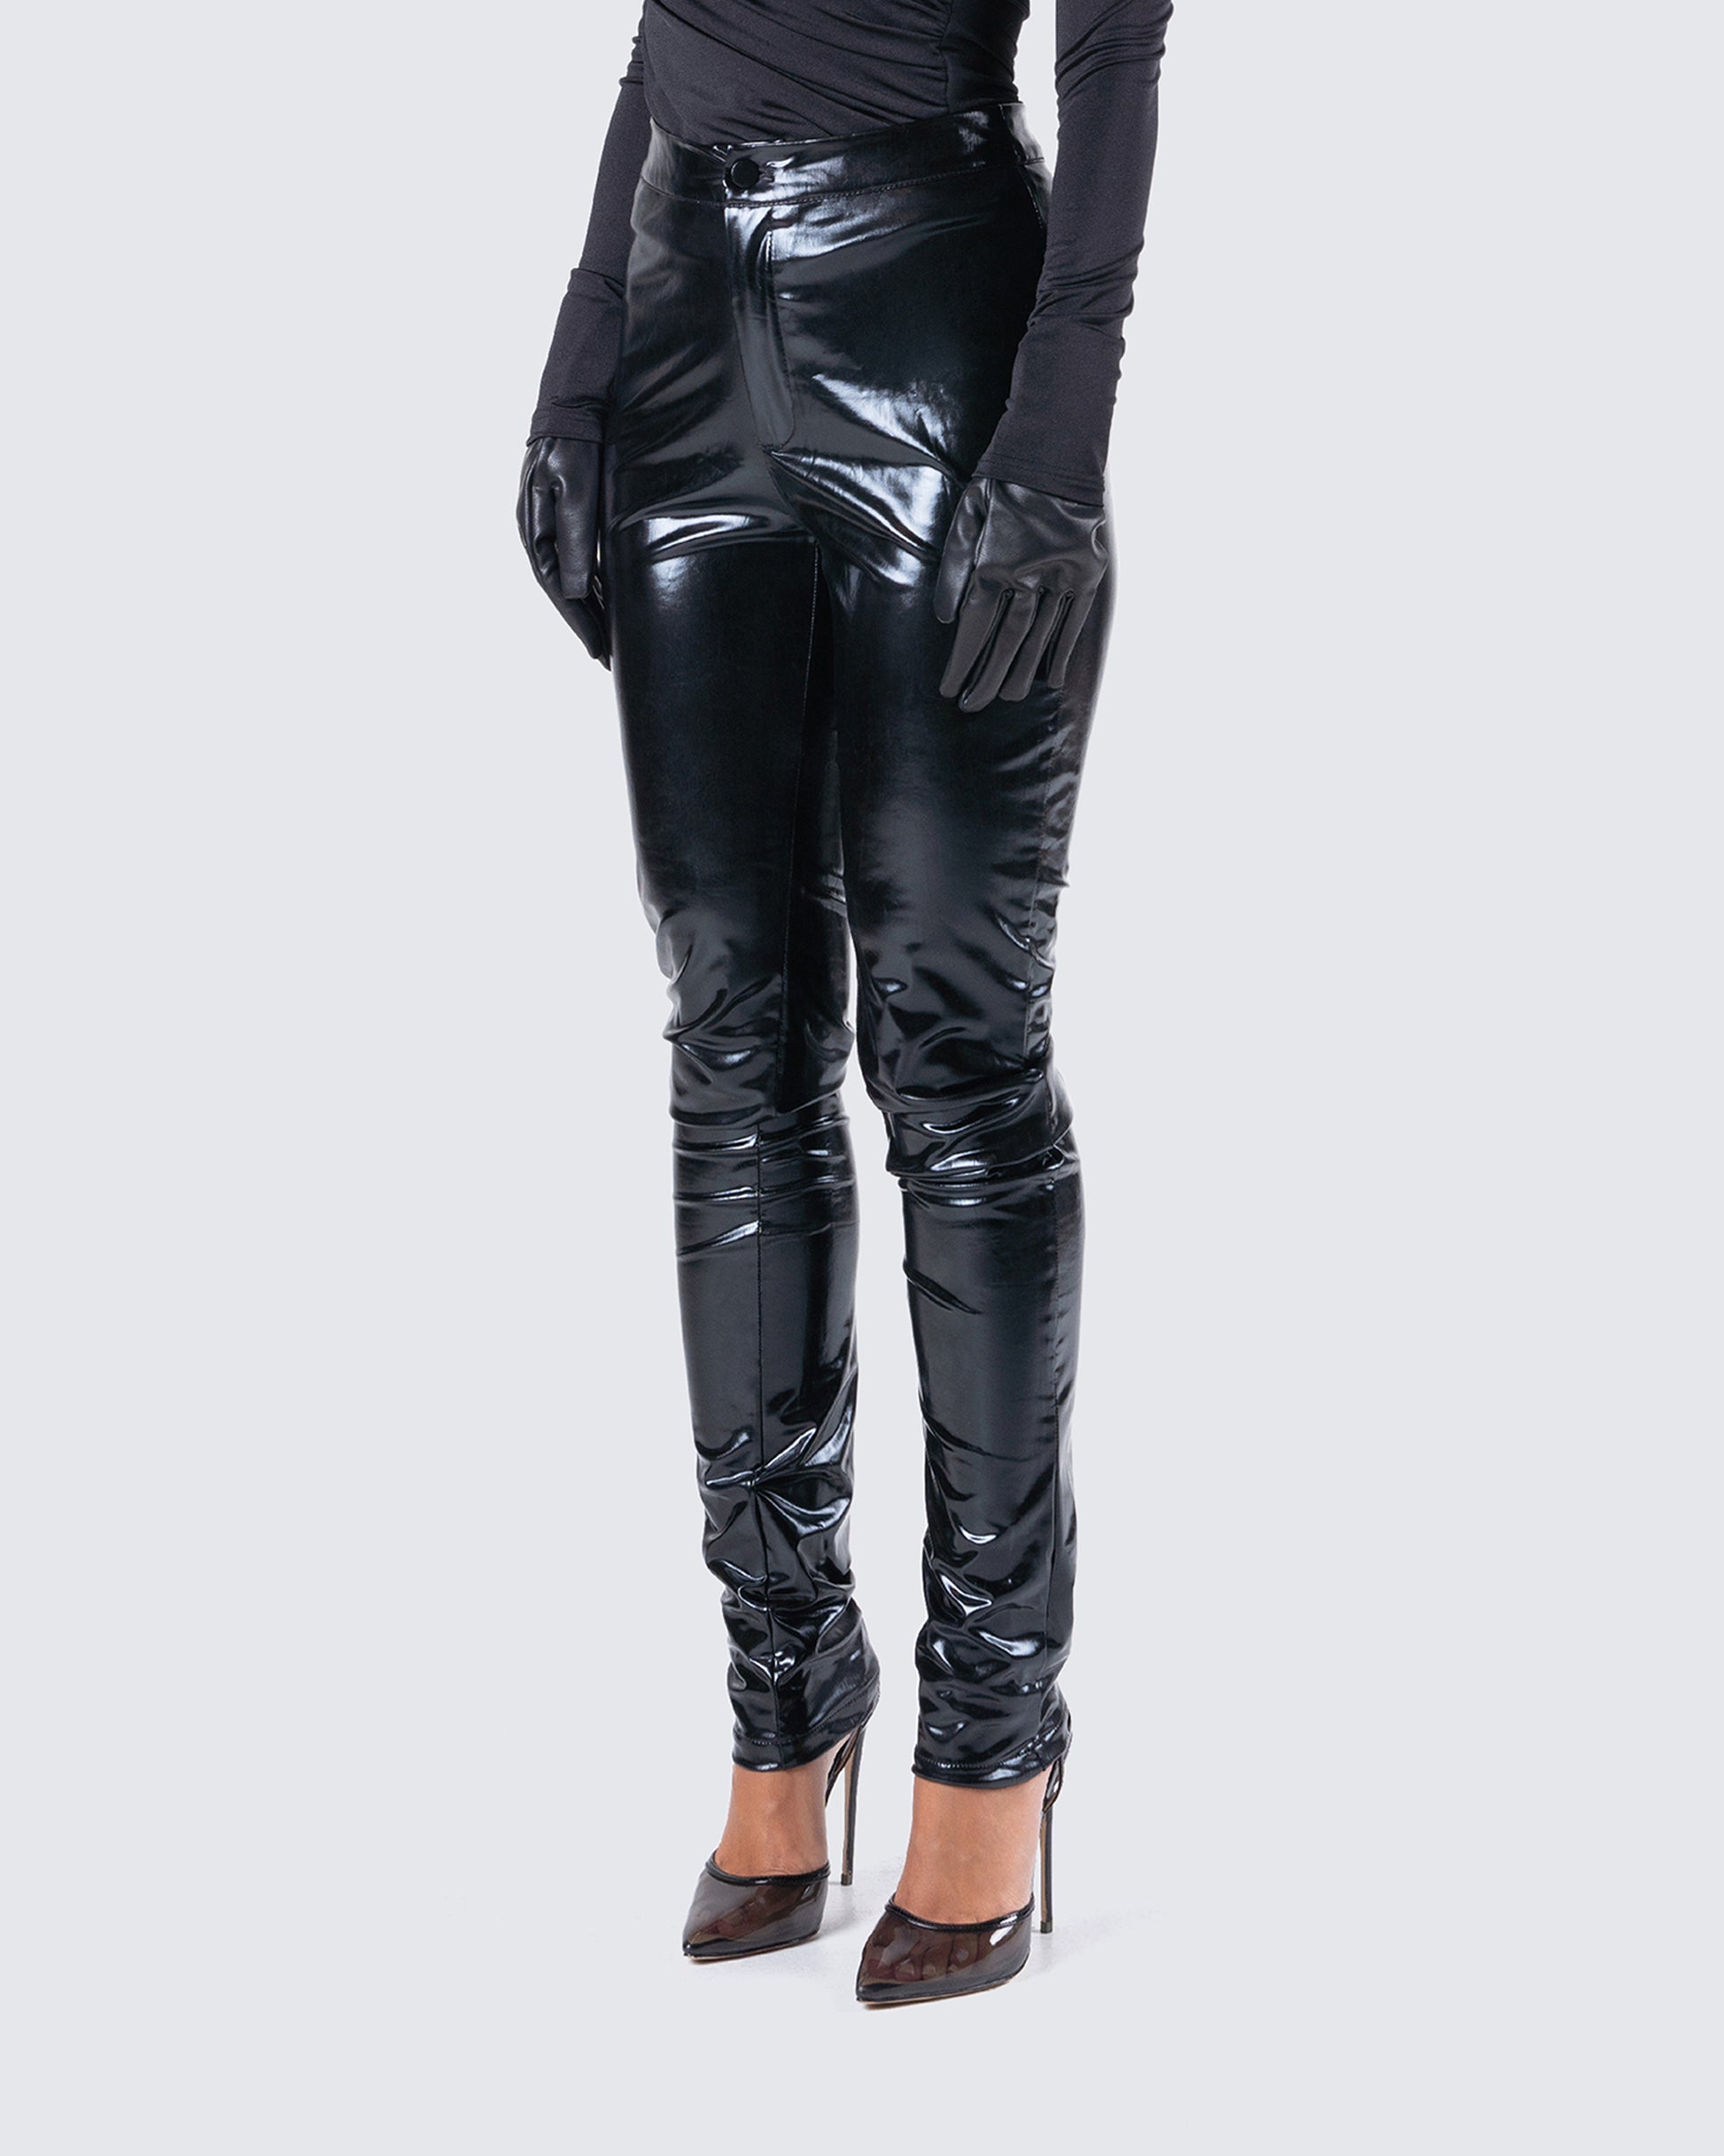 Zara 100% Polyurethane Solid Black Faux Leather Pants Size XS - 49